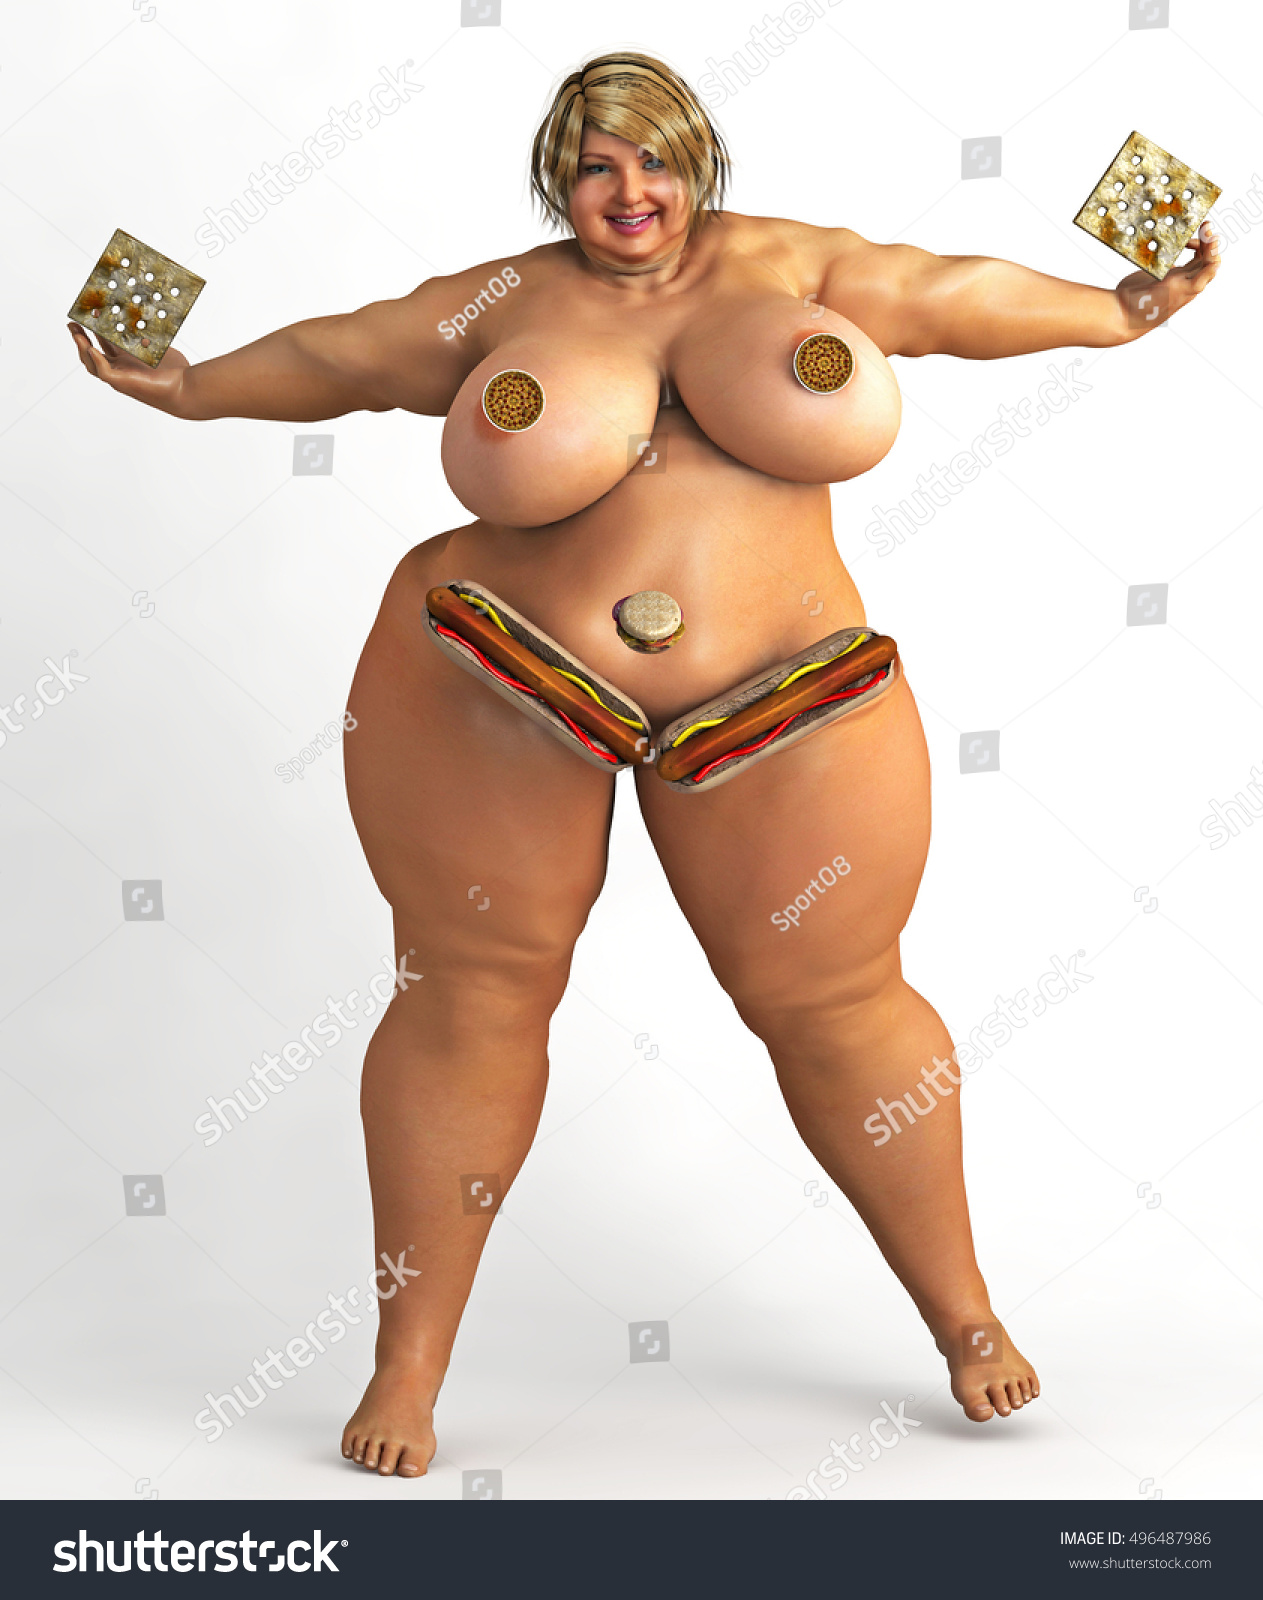 Big Woman Nude